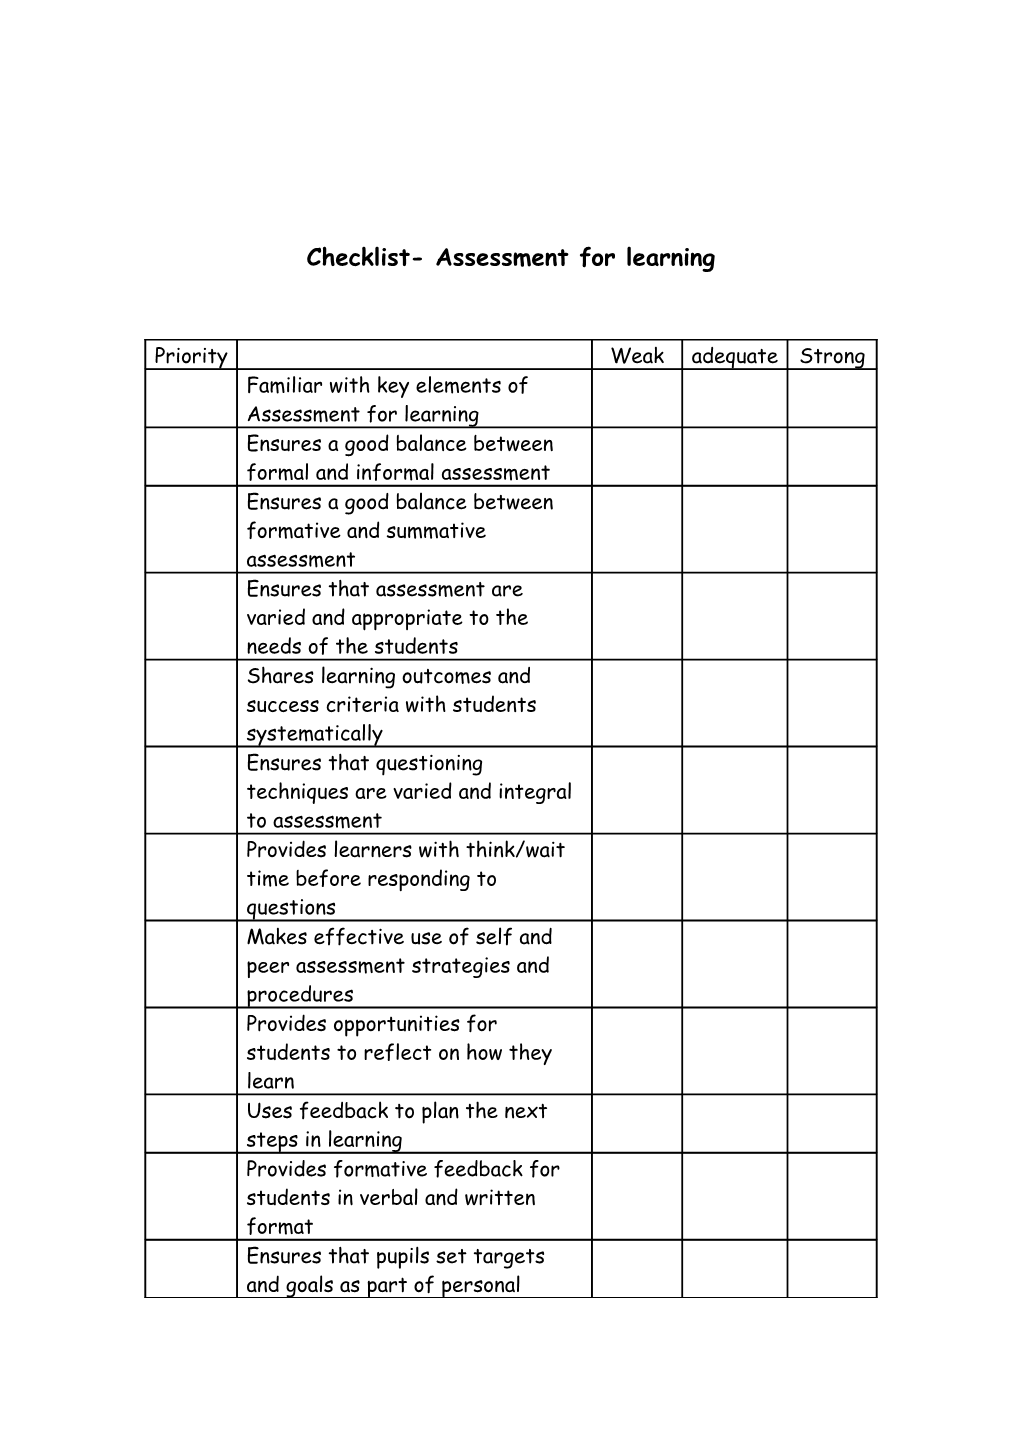 Checklist- Collaborative Learning